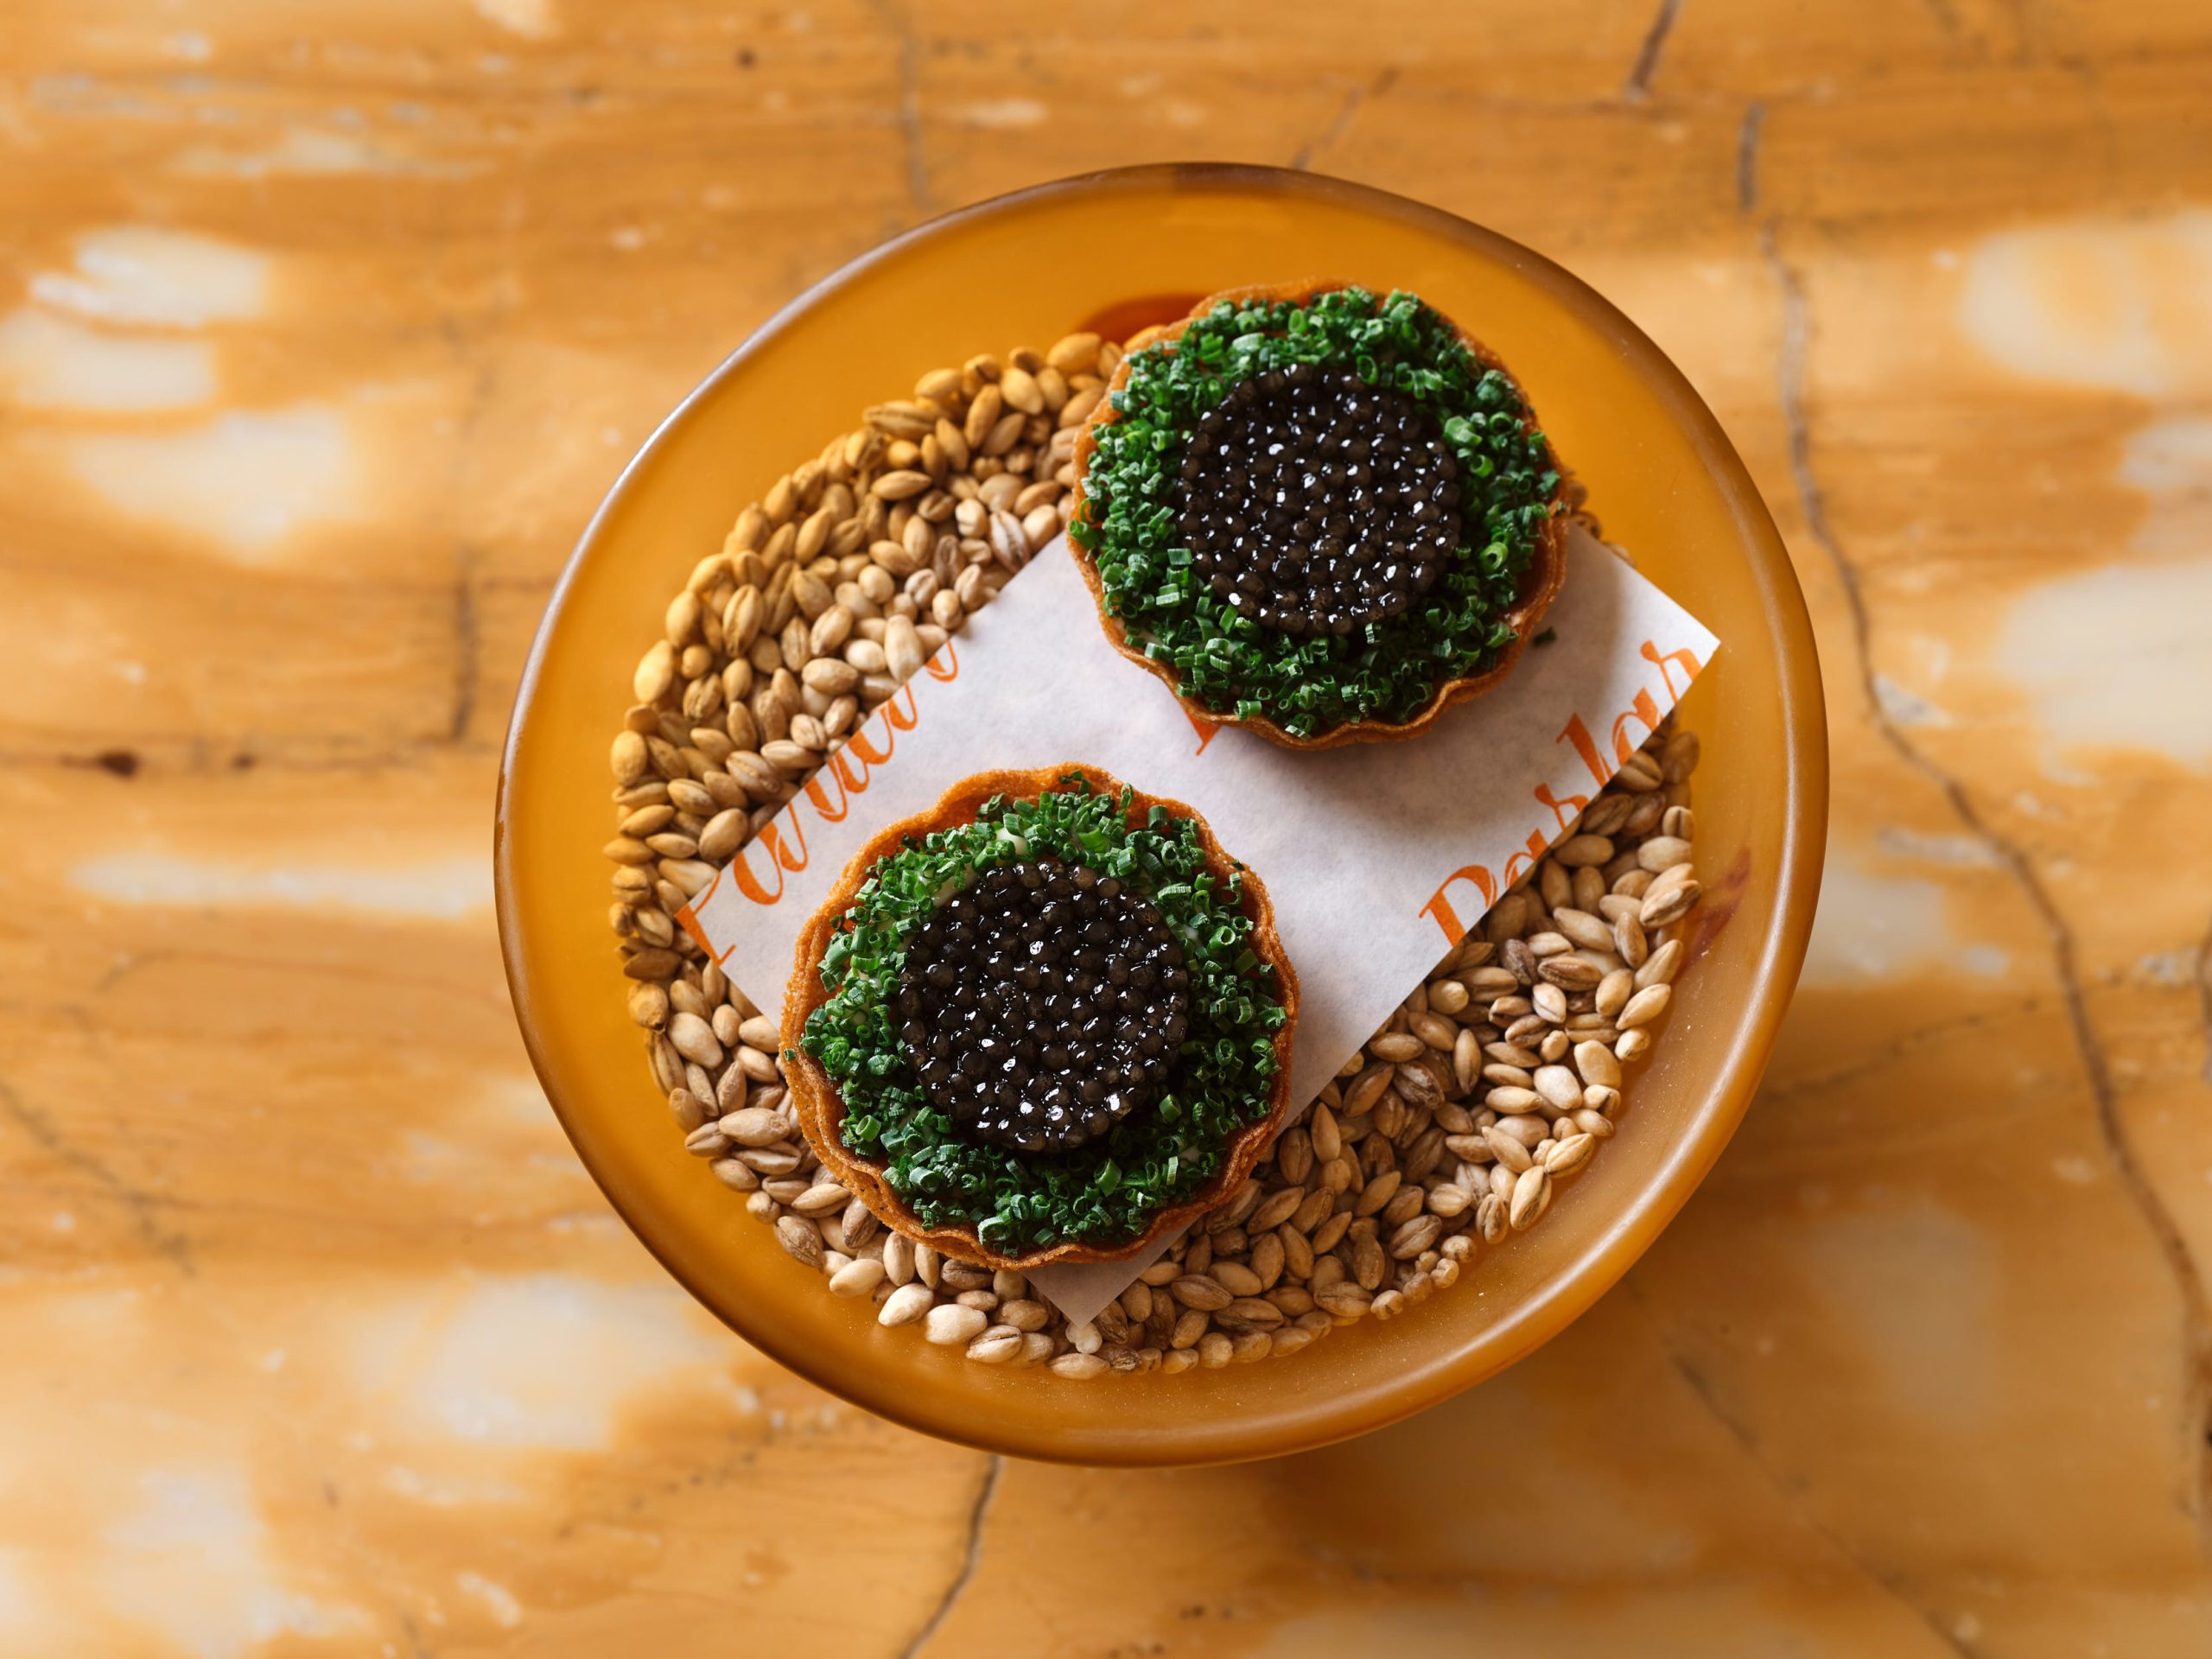 The bacalao and caviar tart at Sydney restaurant Parlar.